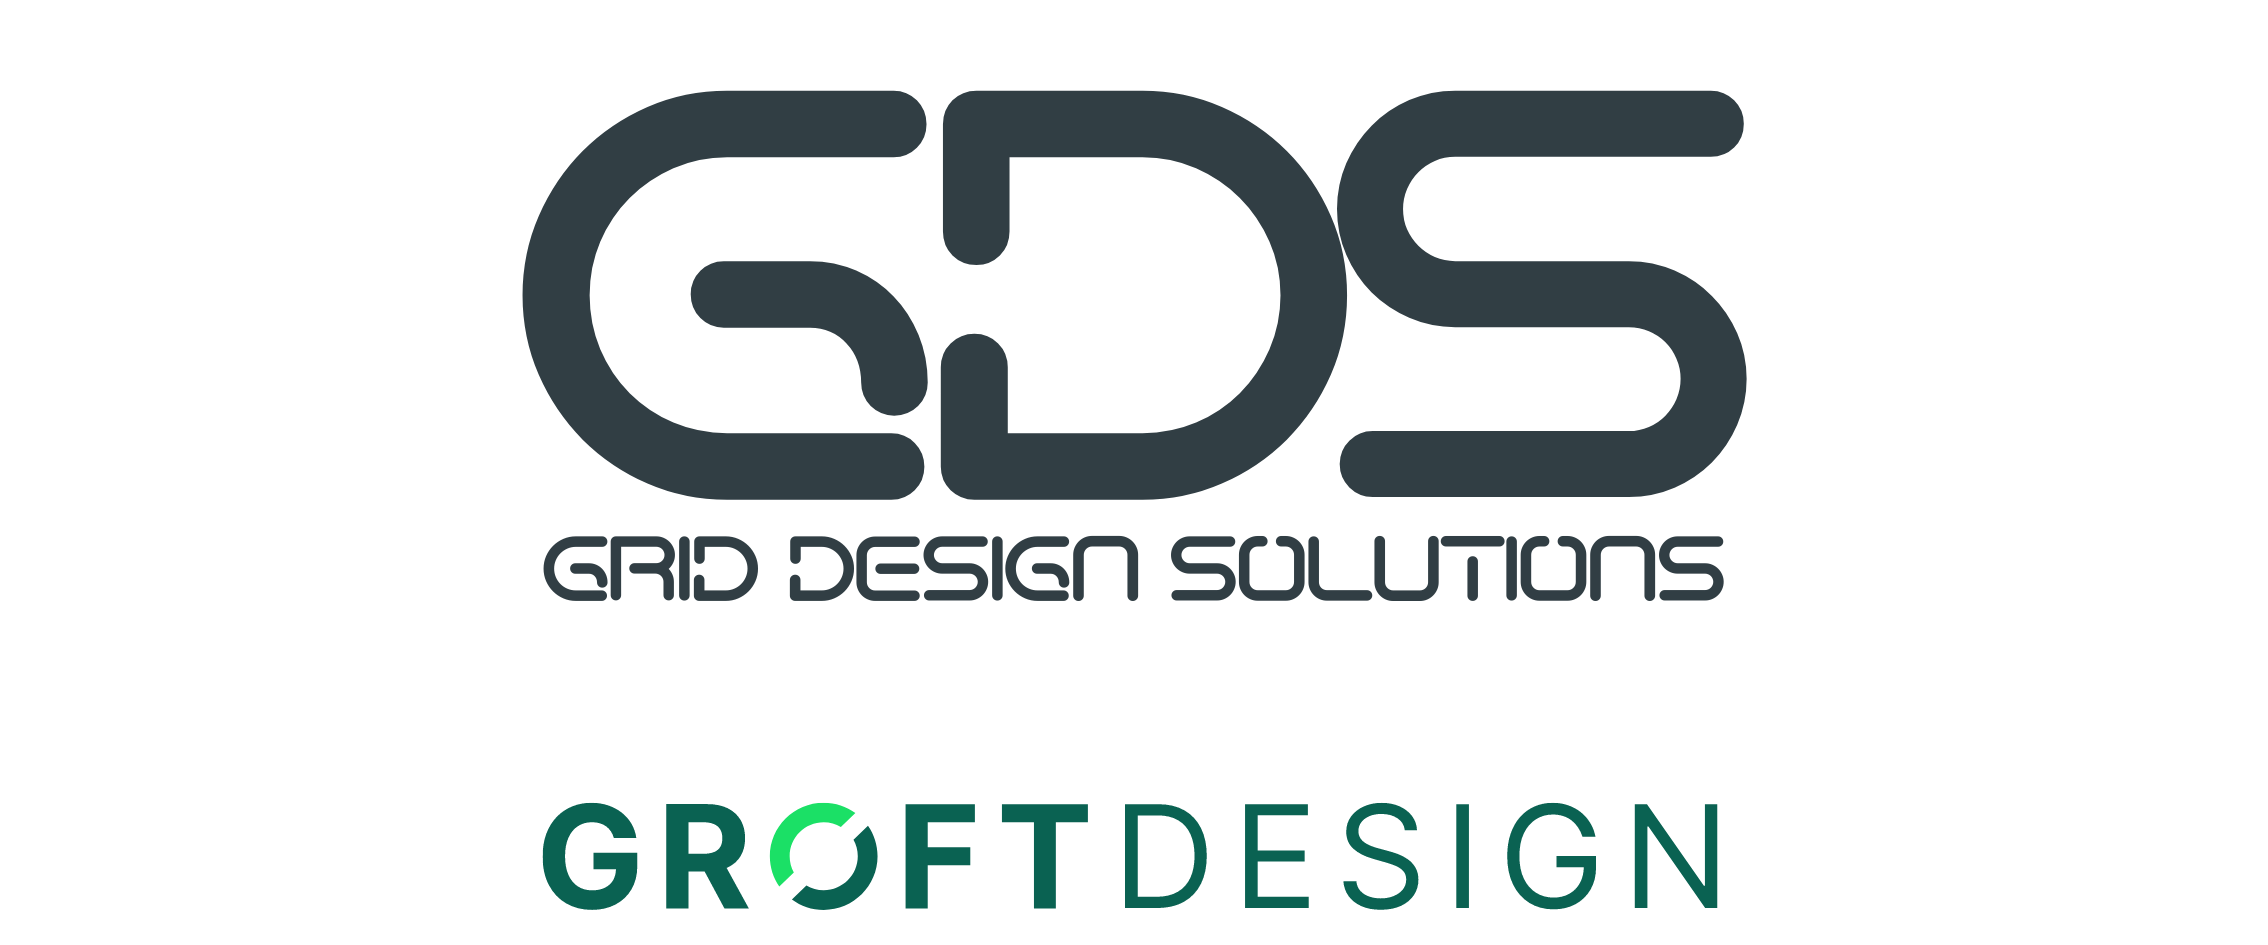 Grid Design Solutions